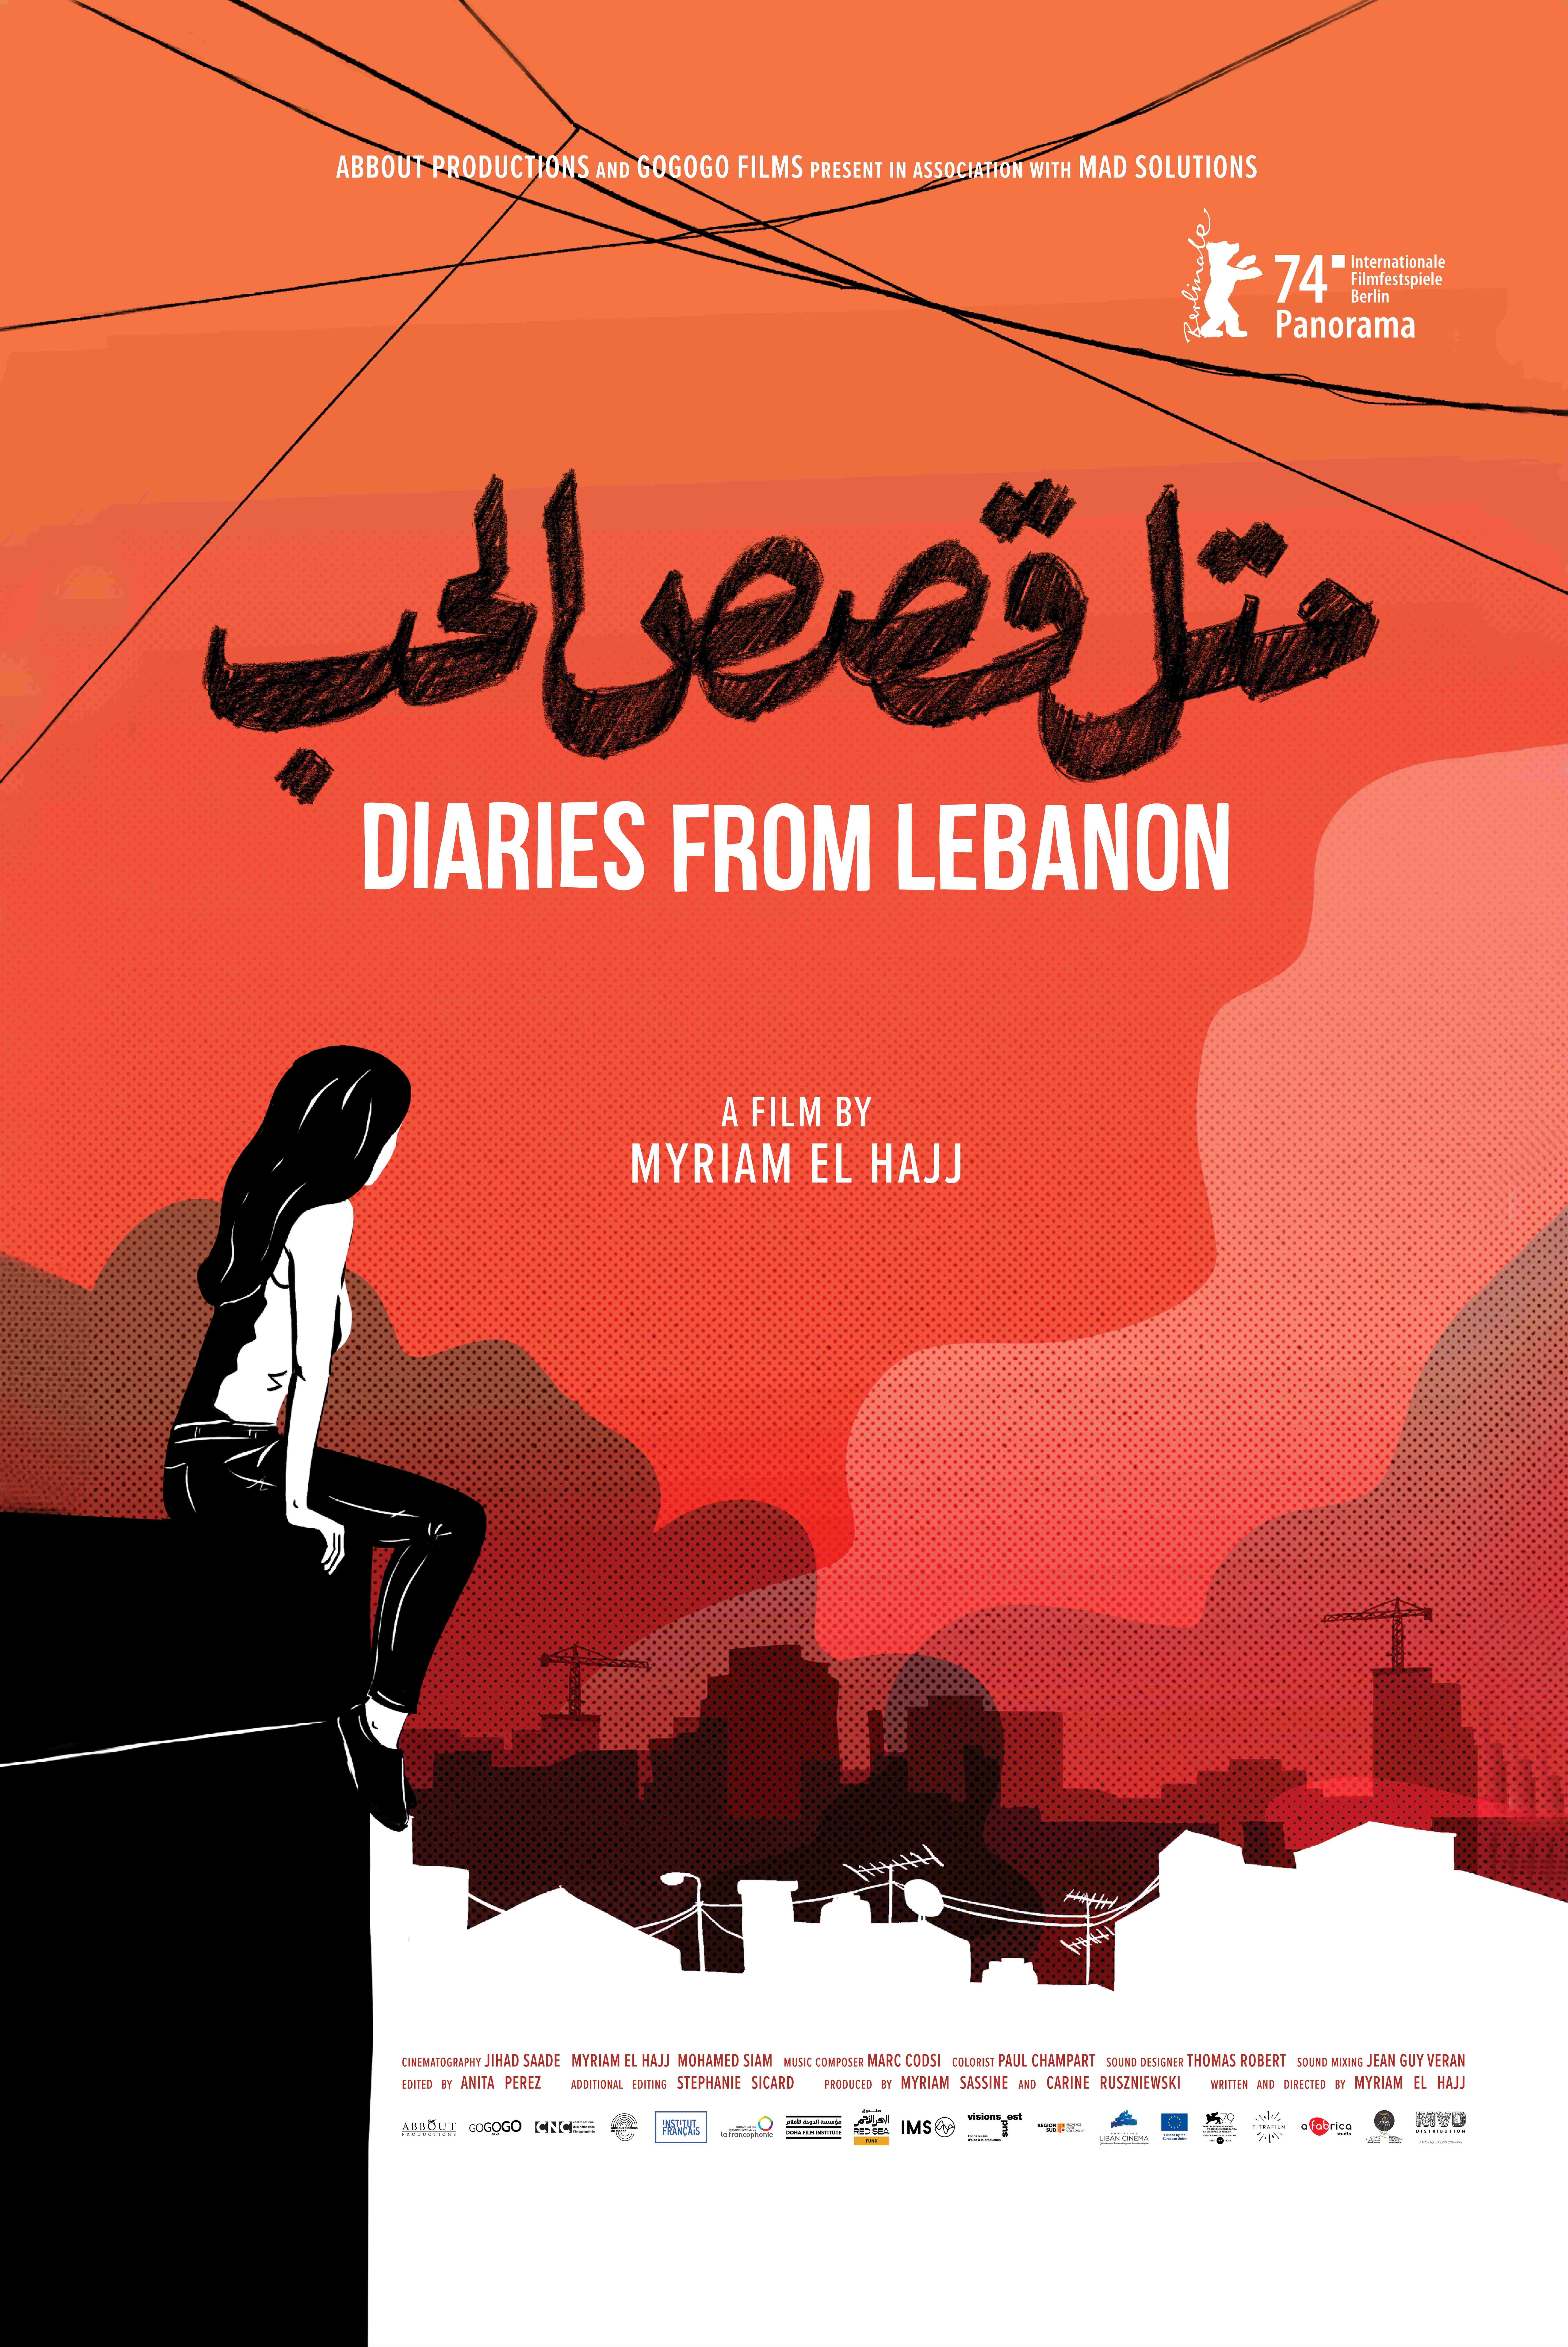 DIARIES FROM LEBANON Film